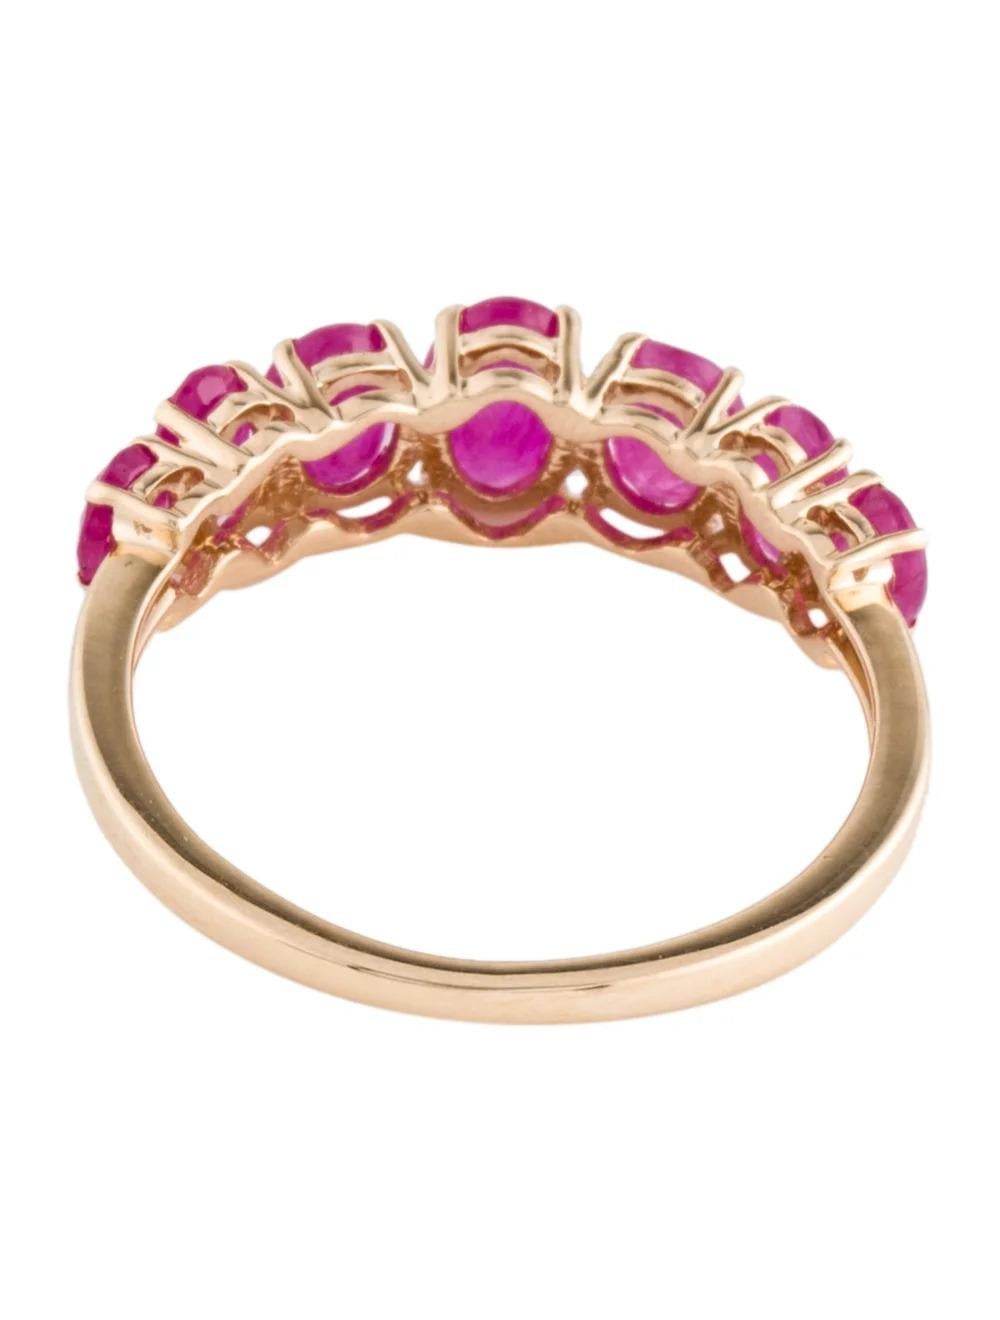 14K Ruby Band Ring Size 8 - Vibrant Gemstone, Yellow Gold, Elegant Design Neuf - En vente à Holtsville, NY